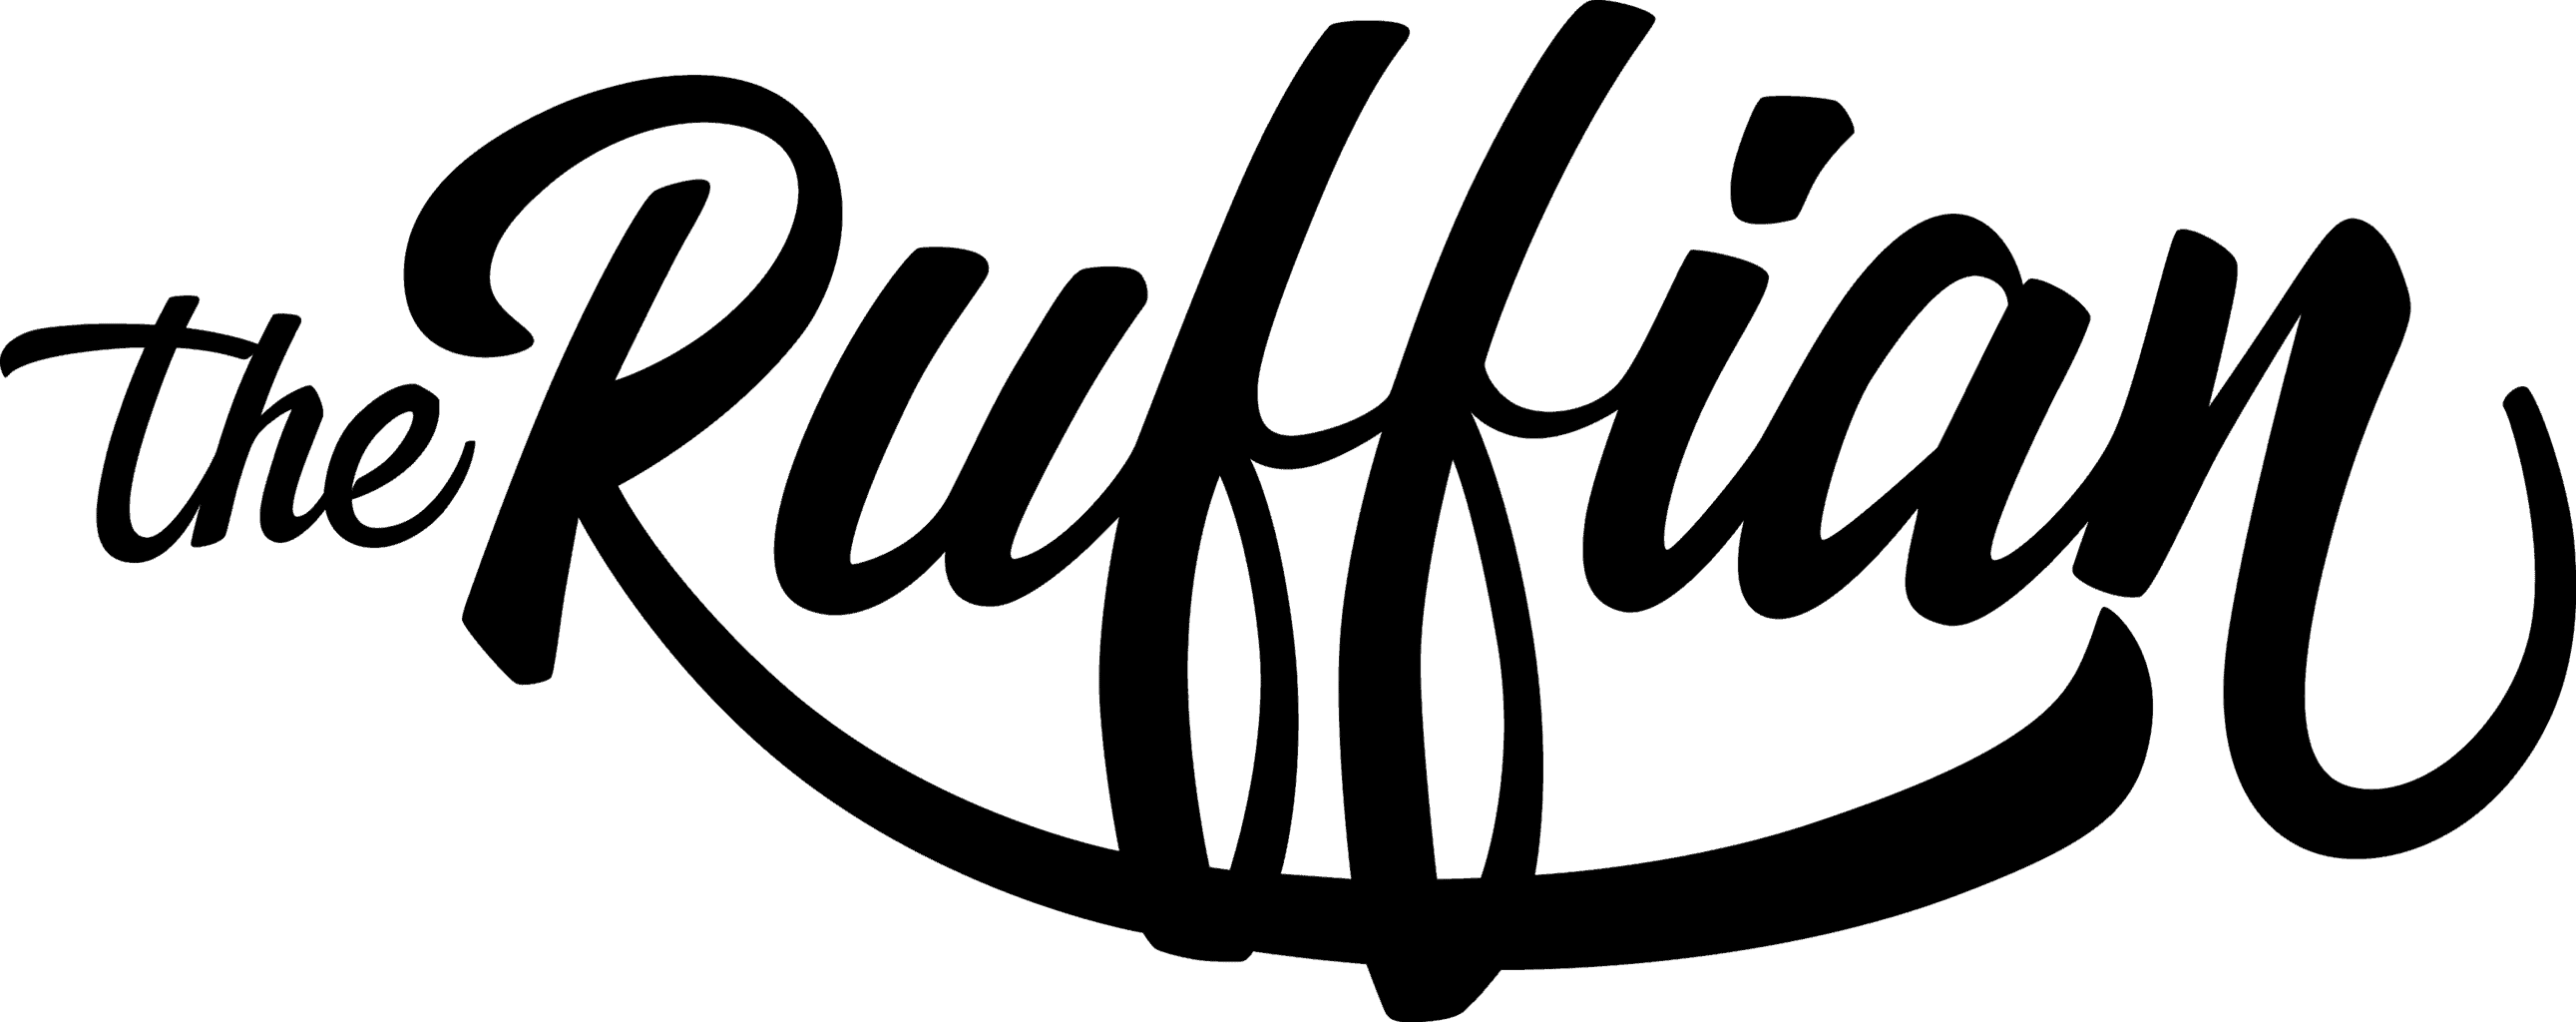 Ruffian Logo - Black